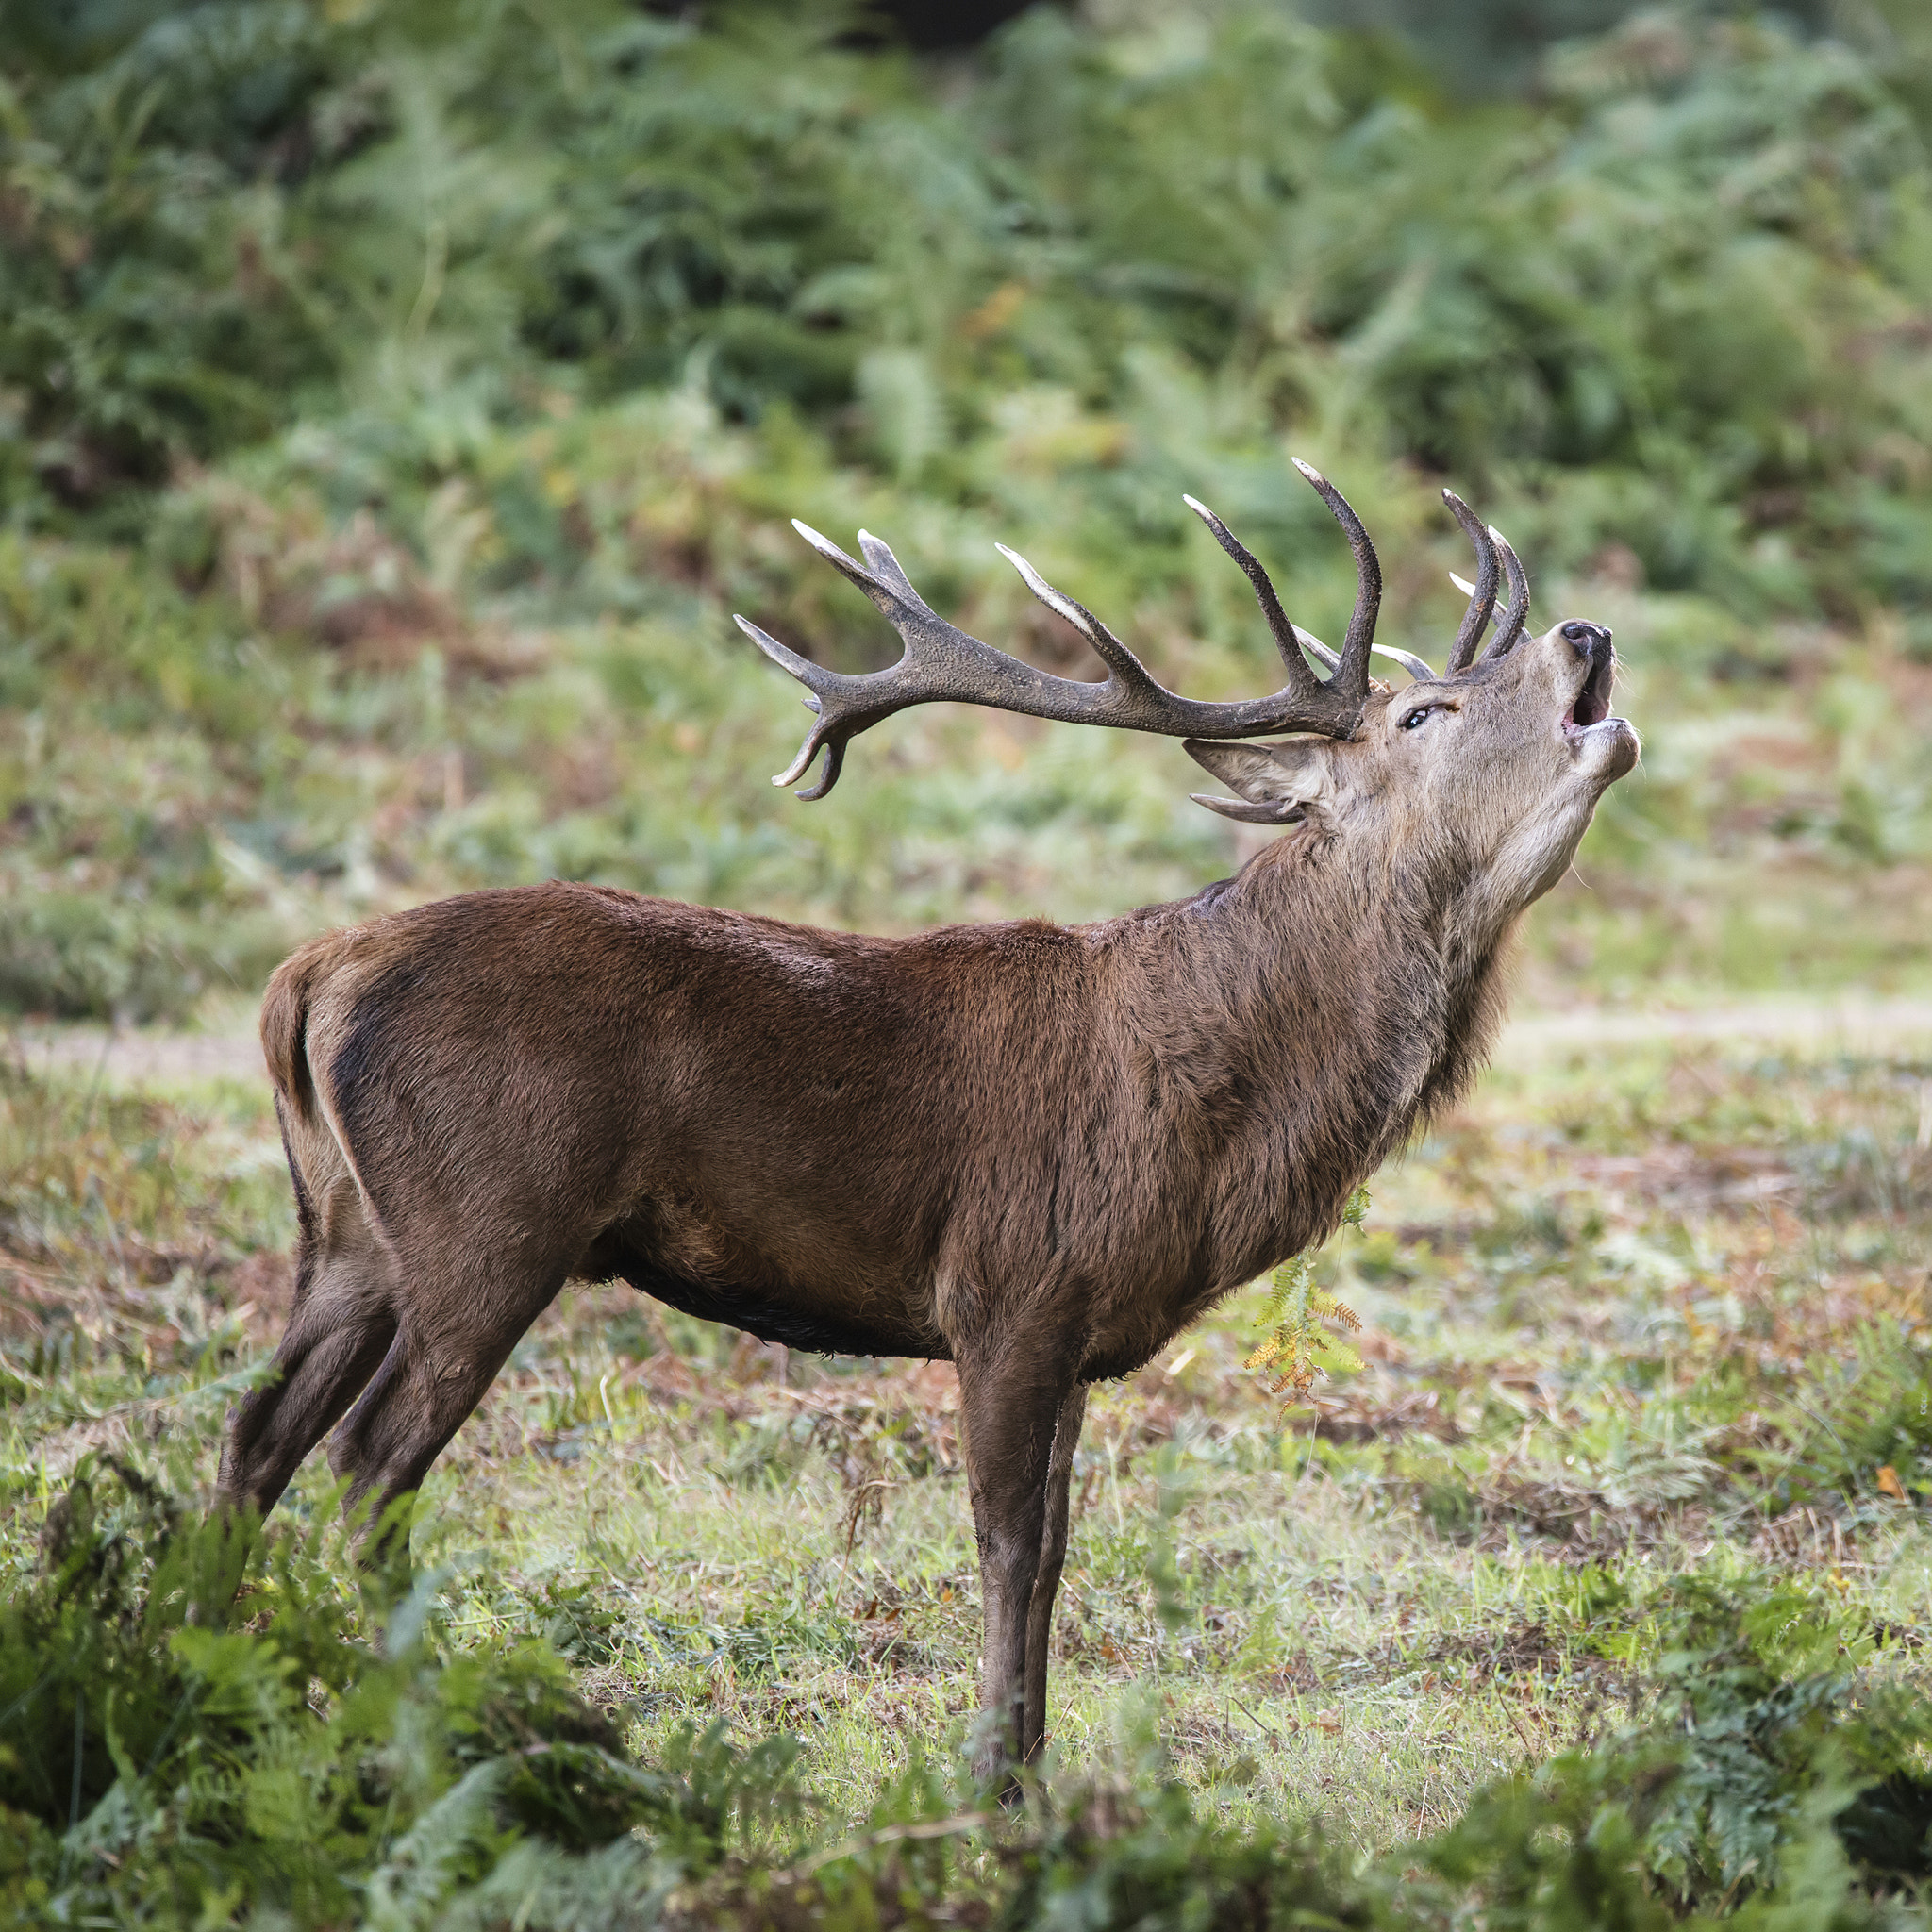 Nikon D800 + Sigma 150-600mm F5-6.3 DG OS HSM | C sample photo. Majestic powerful red deer stag cervus elaphus in forest landsca photography